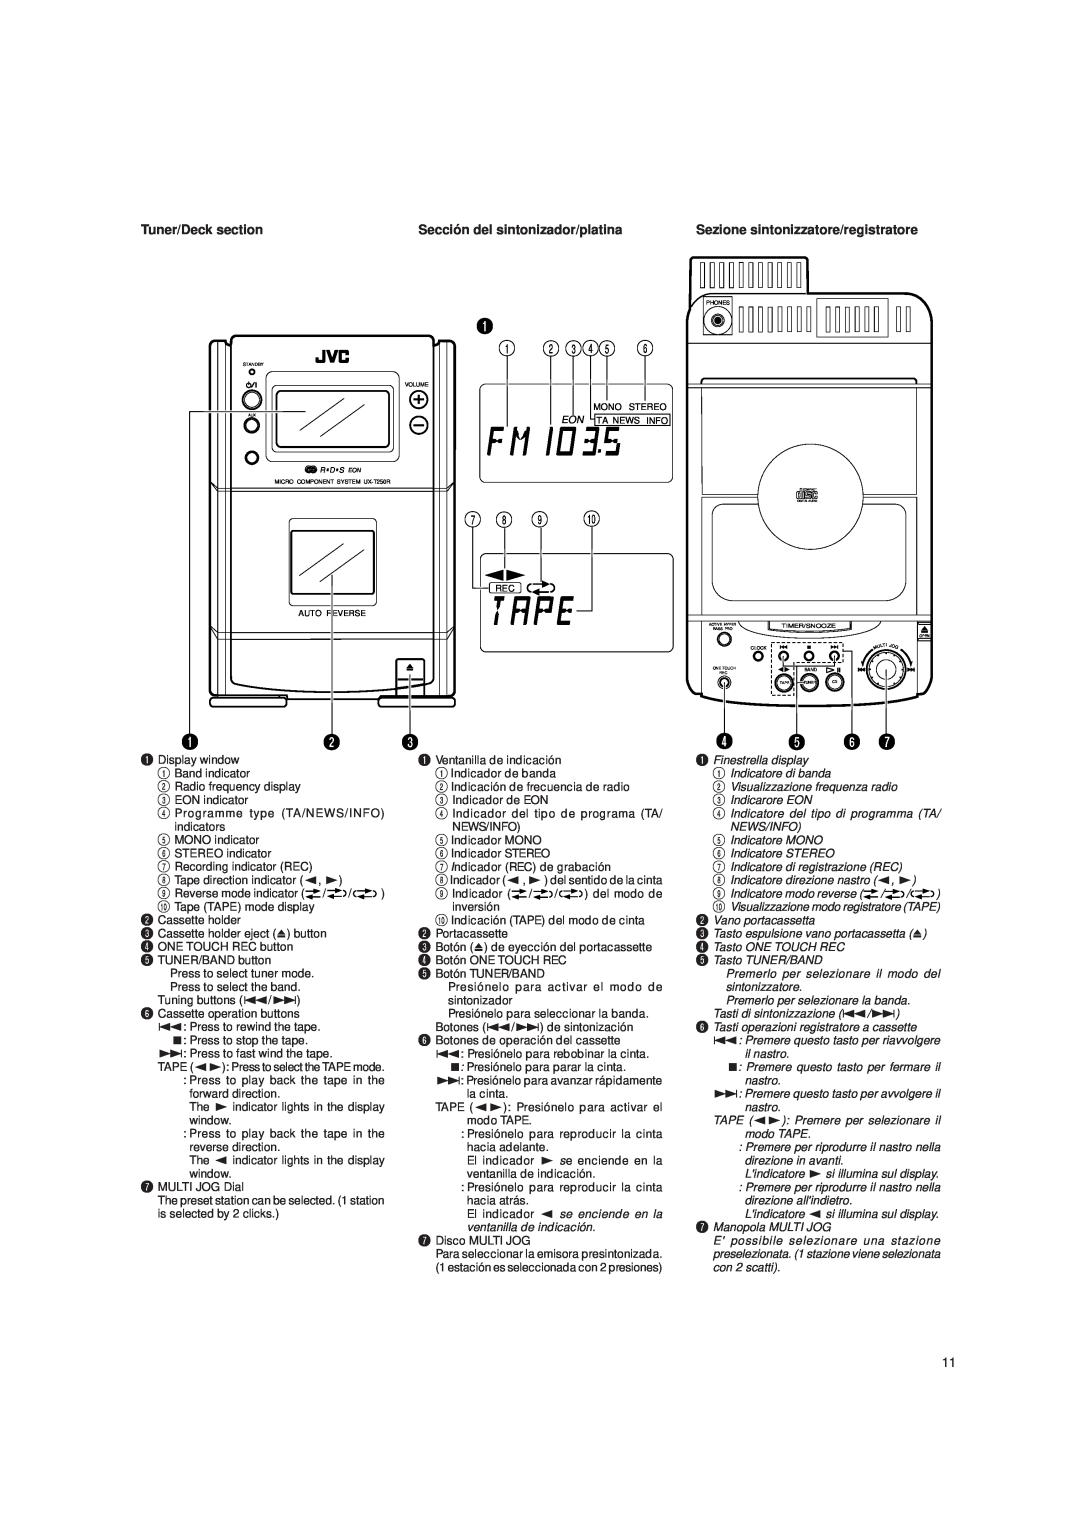 JVC UX-T250R, LVT0059-001A manual Tuner/Deck section, Sección del sintonizador/platina, Sezione sintonizzatore/registratore 